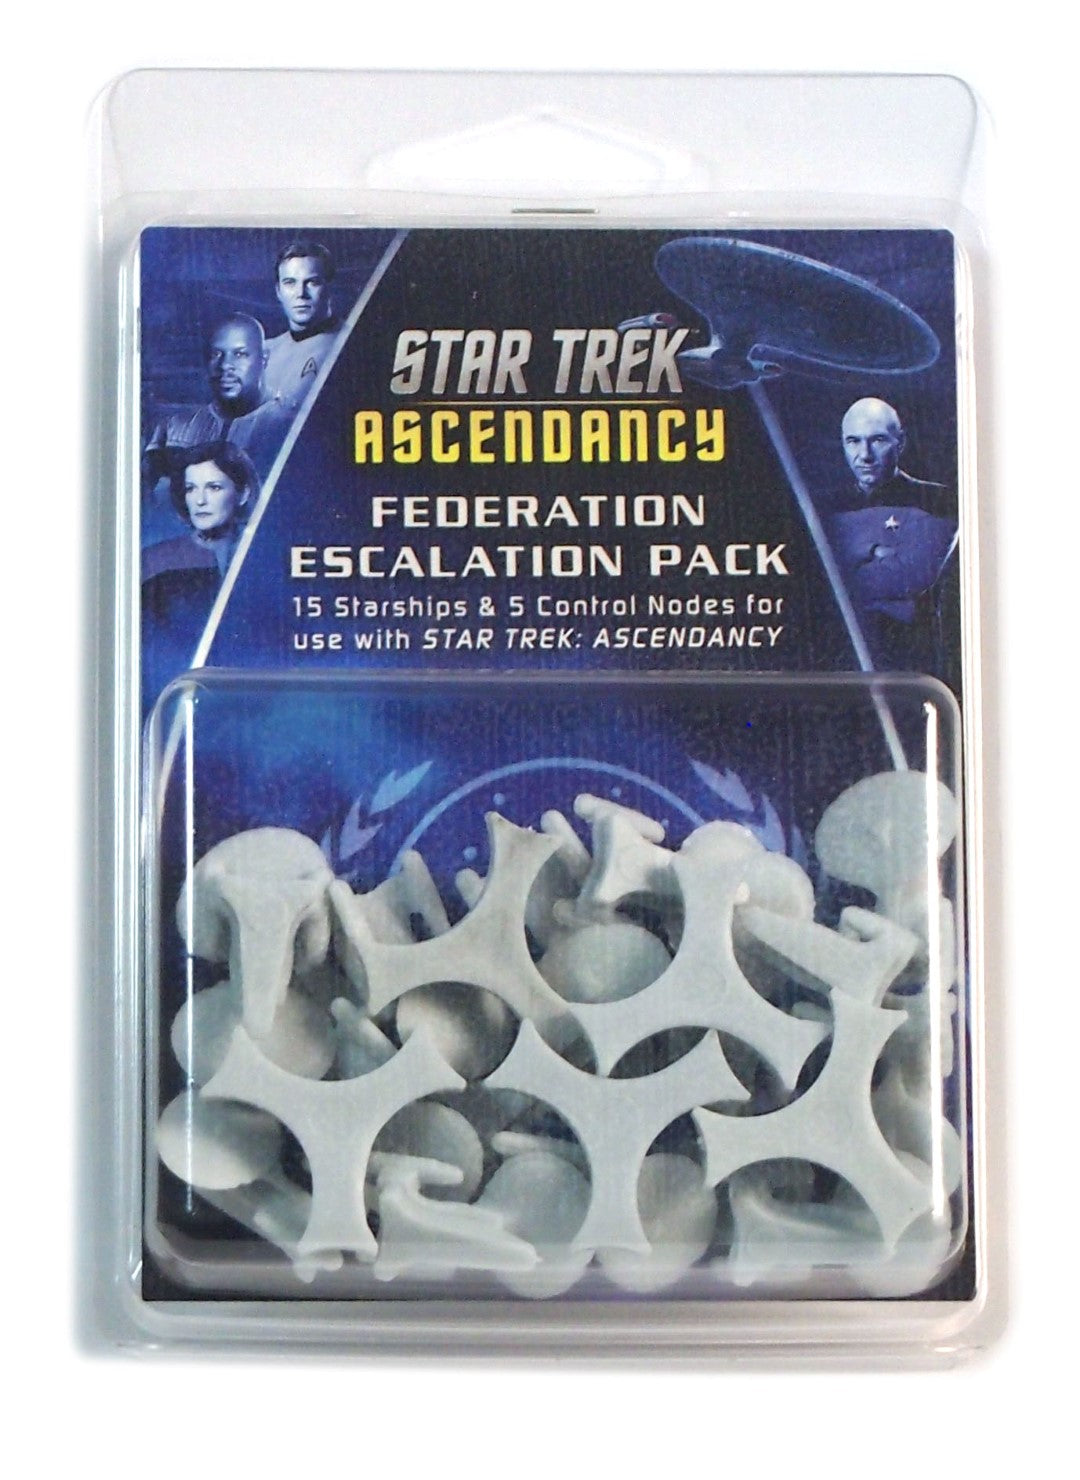 Star Trek Ascendancy, Federation Escalation Pack